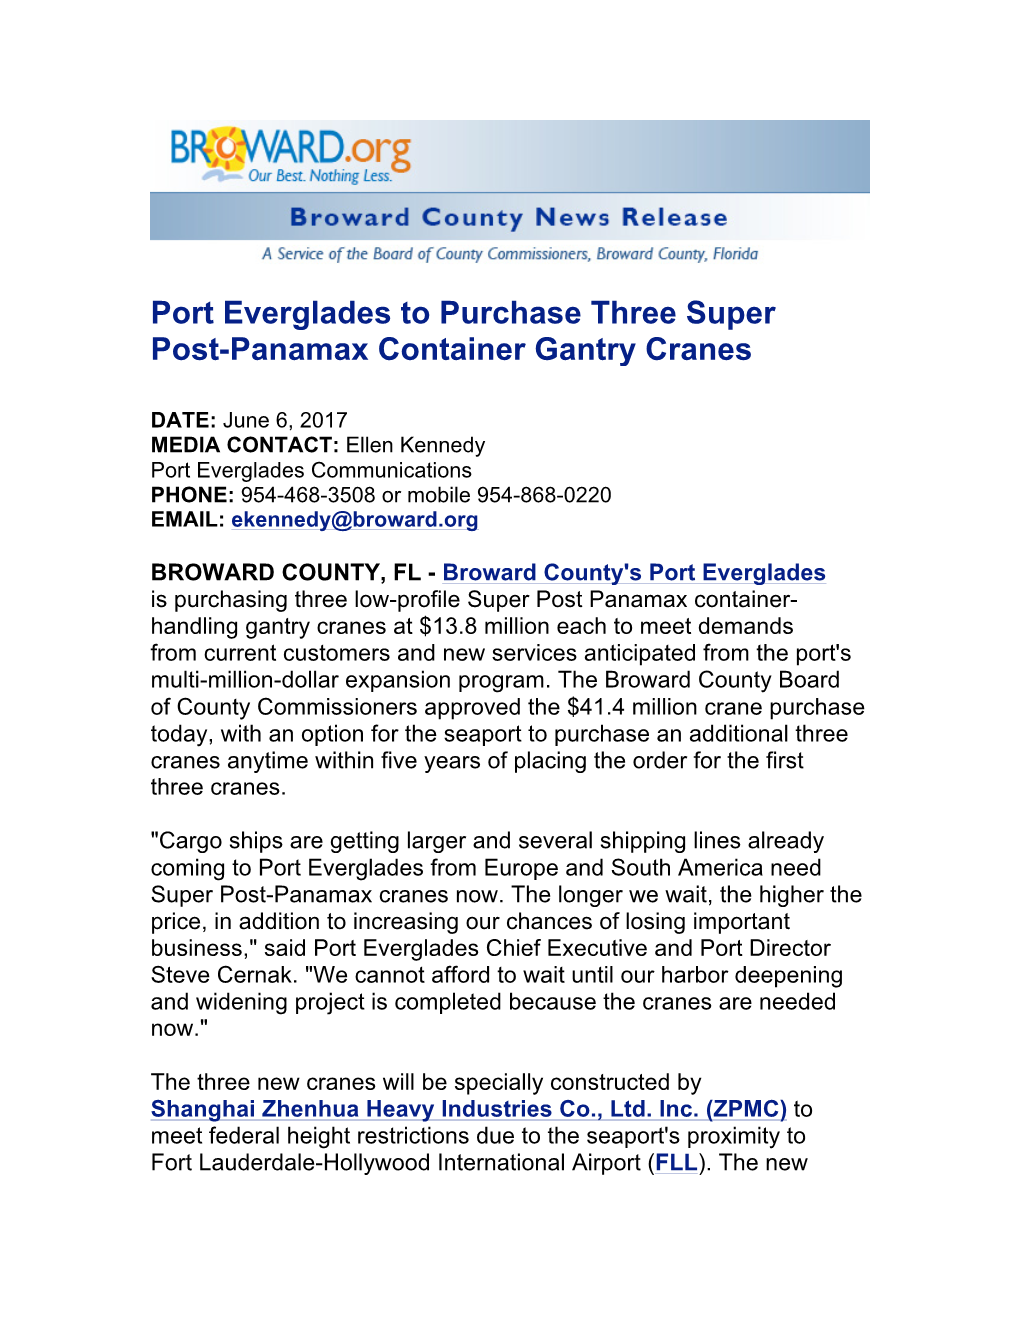 Port Everglades to Purchase Three Super Post-Panamax Container Gantry Cranes